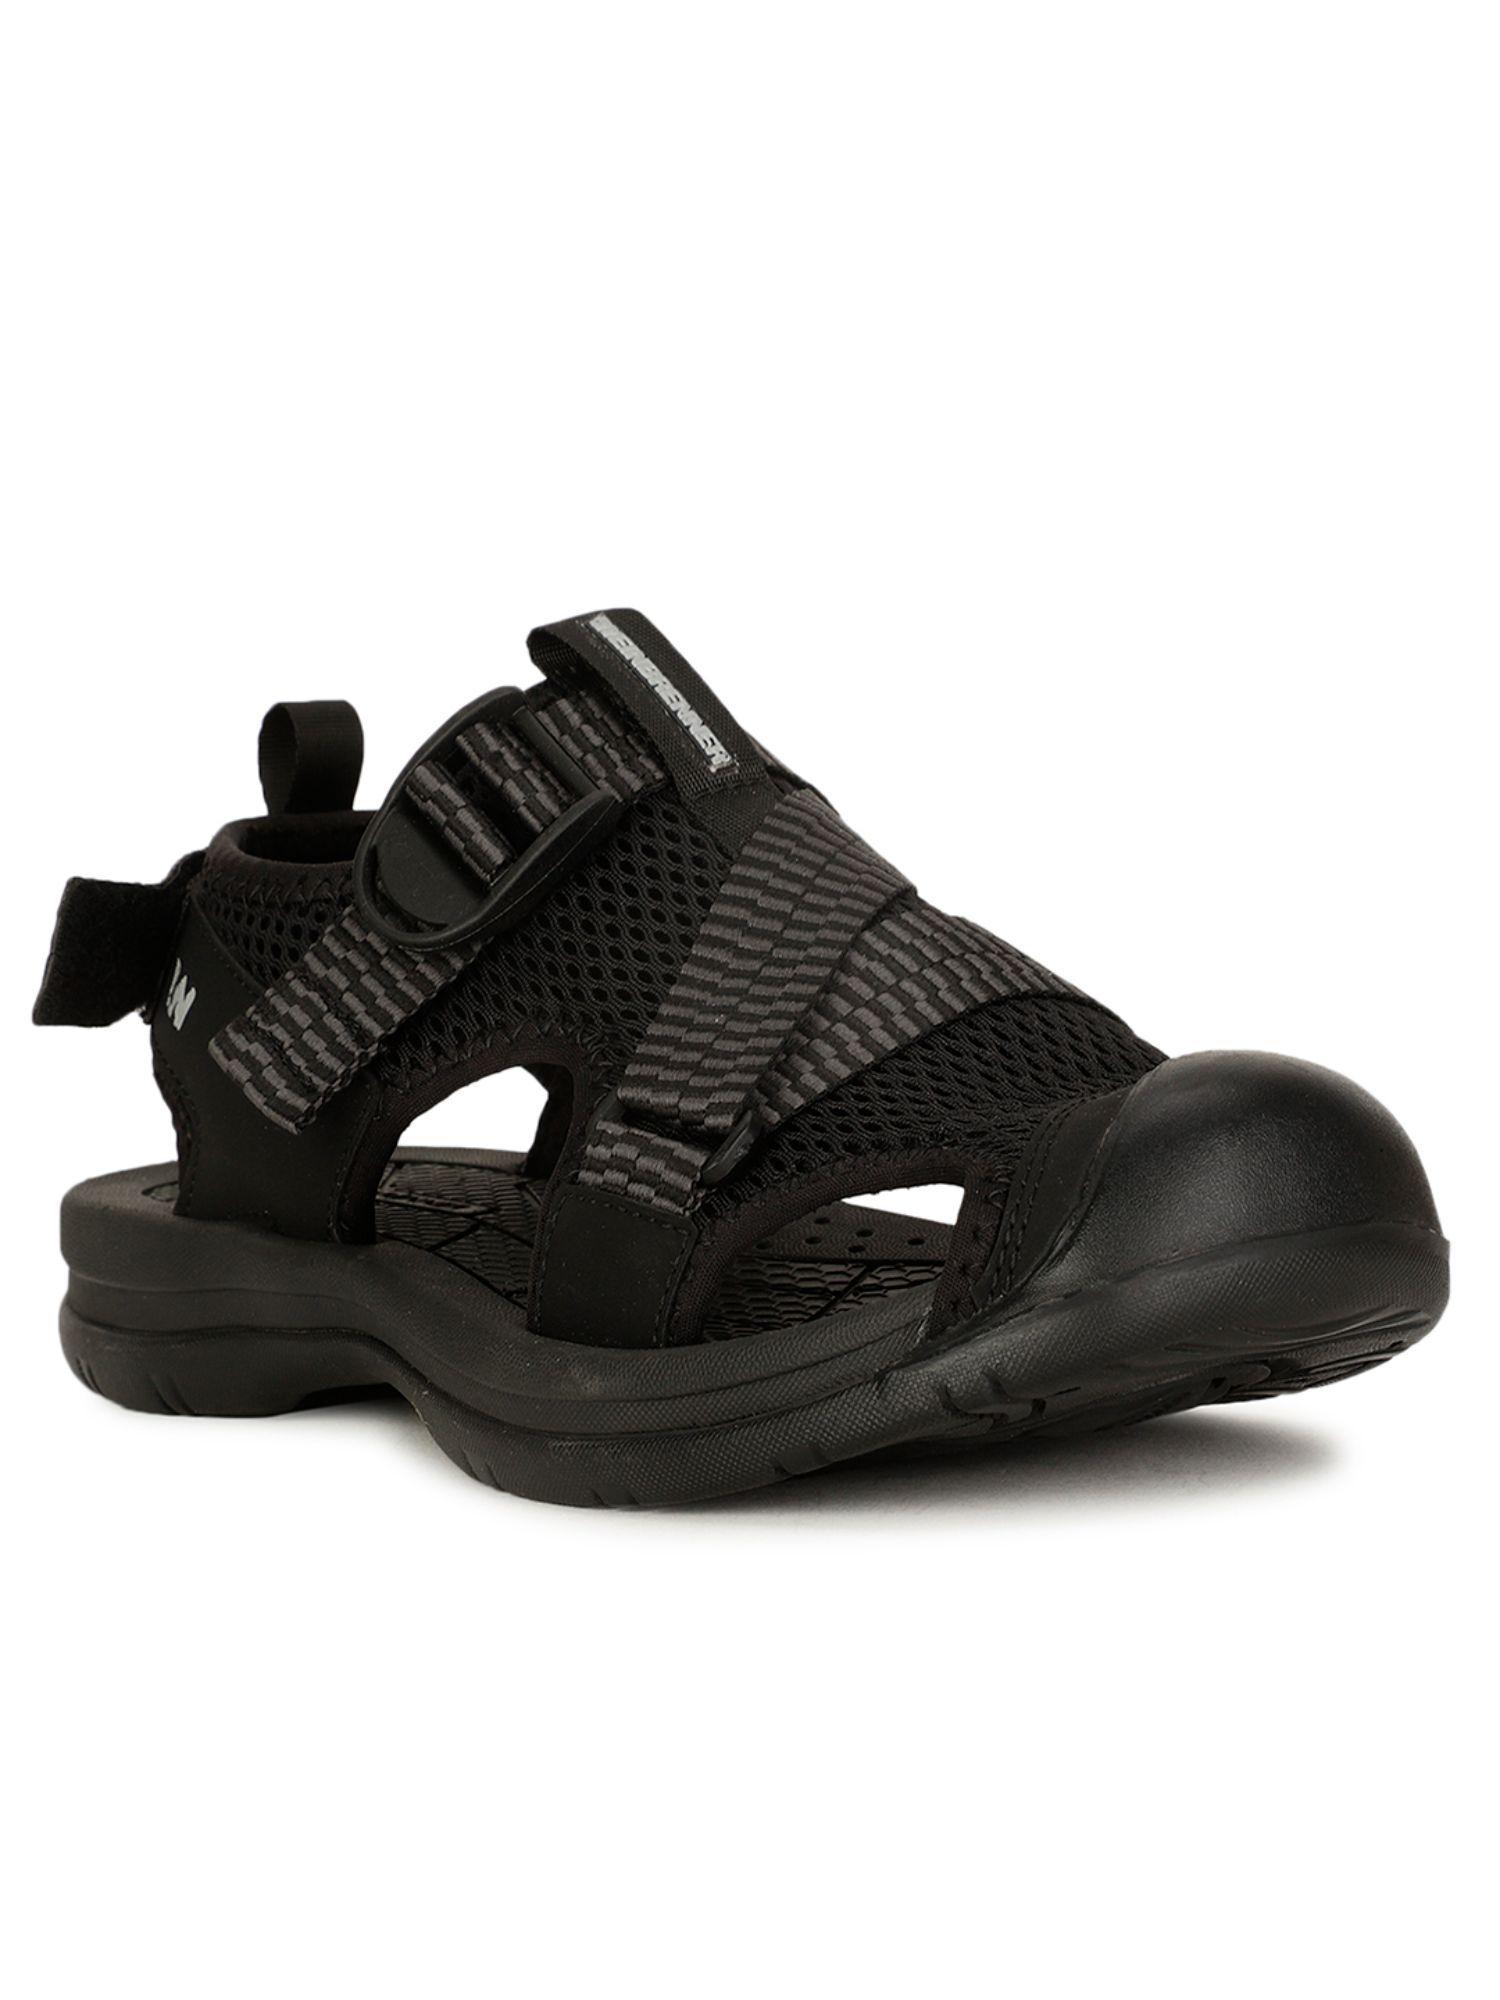 mens black buckle casual sandals